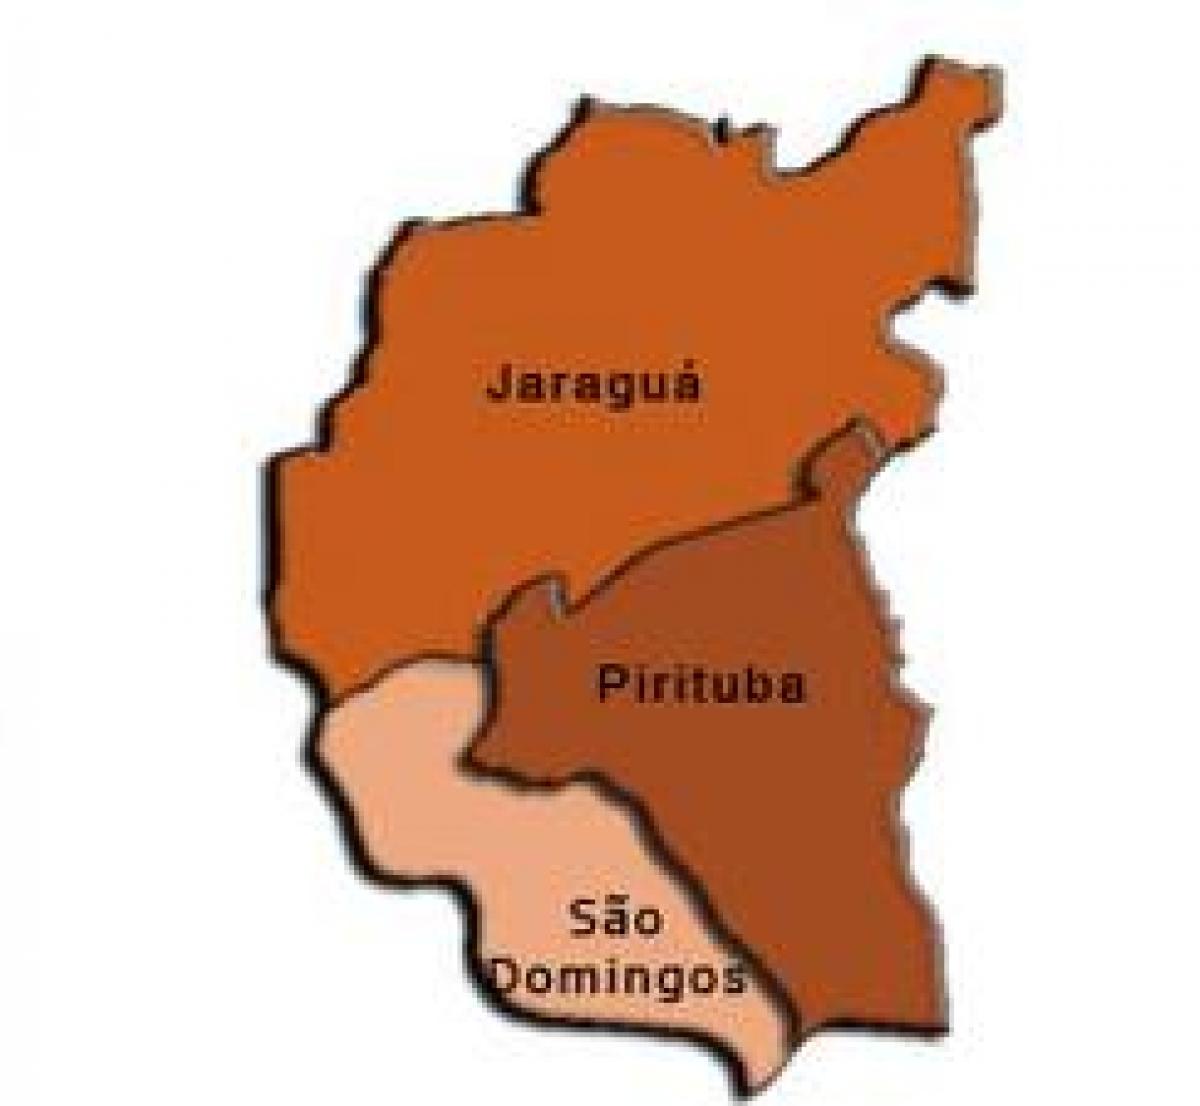 Mapa Pirituba-Jaraguá sub-prefektura